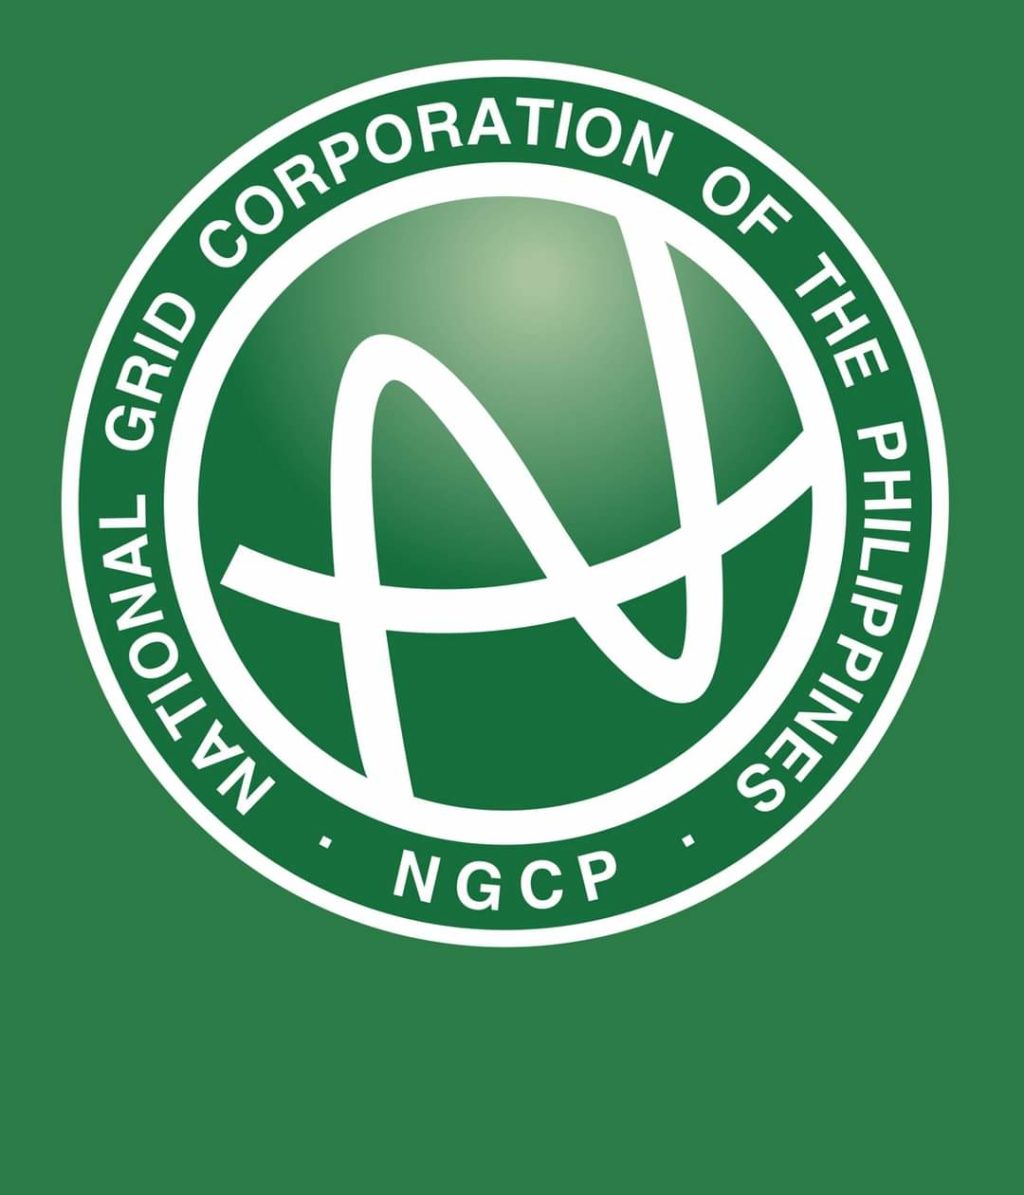 NGCP power line